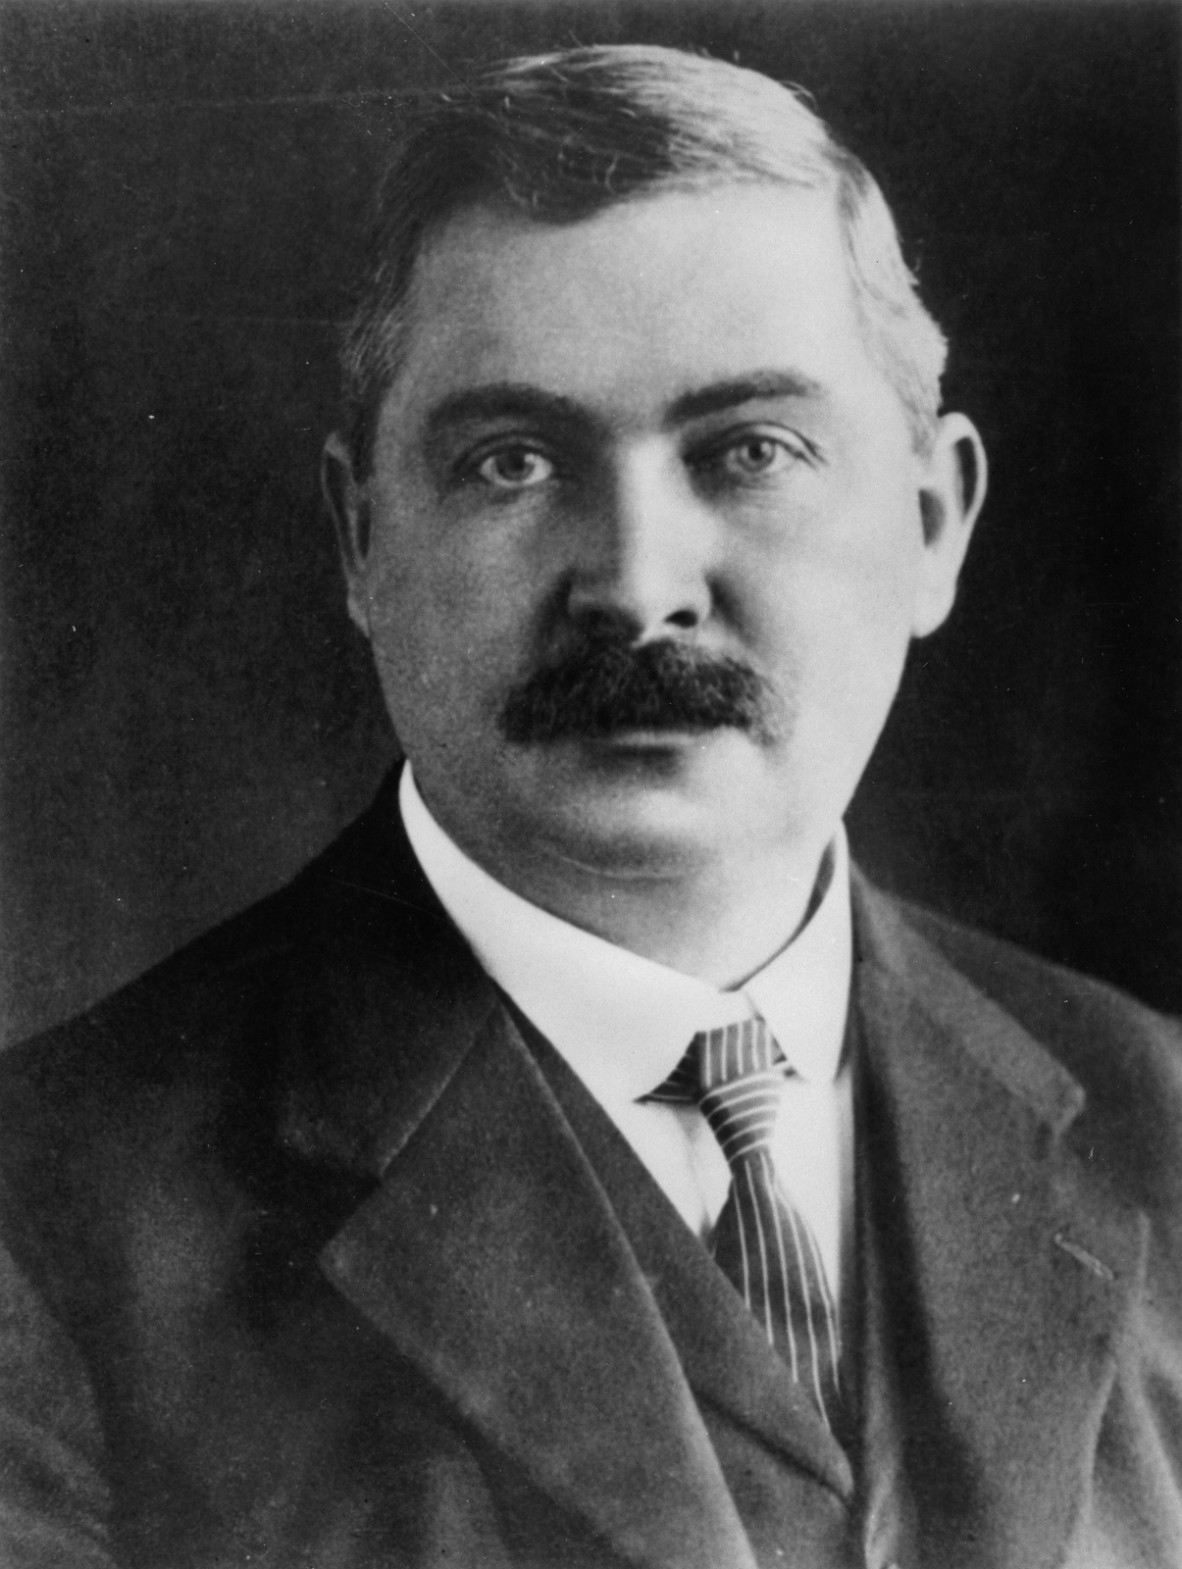 Portrait of The Honourable Thomas Joseph Ryan